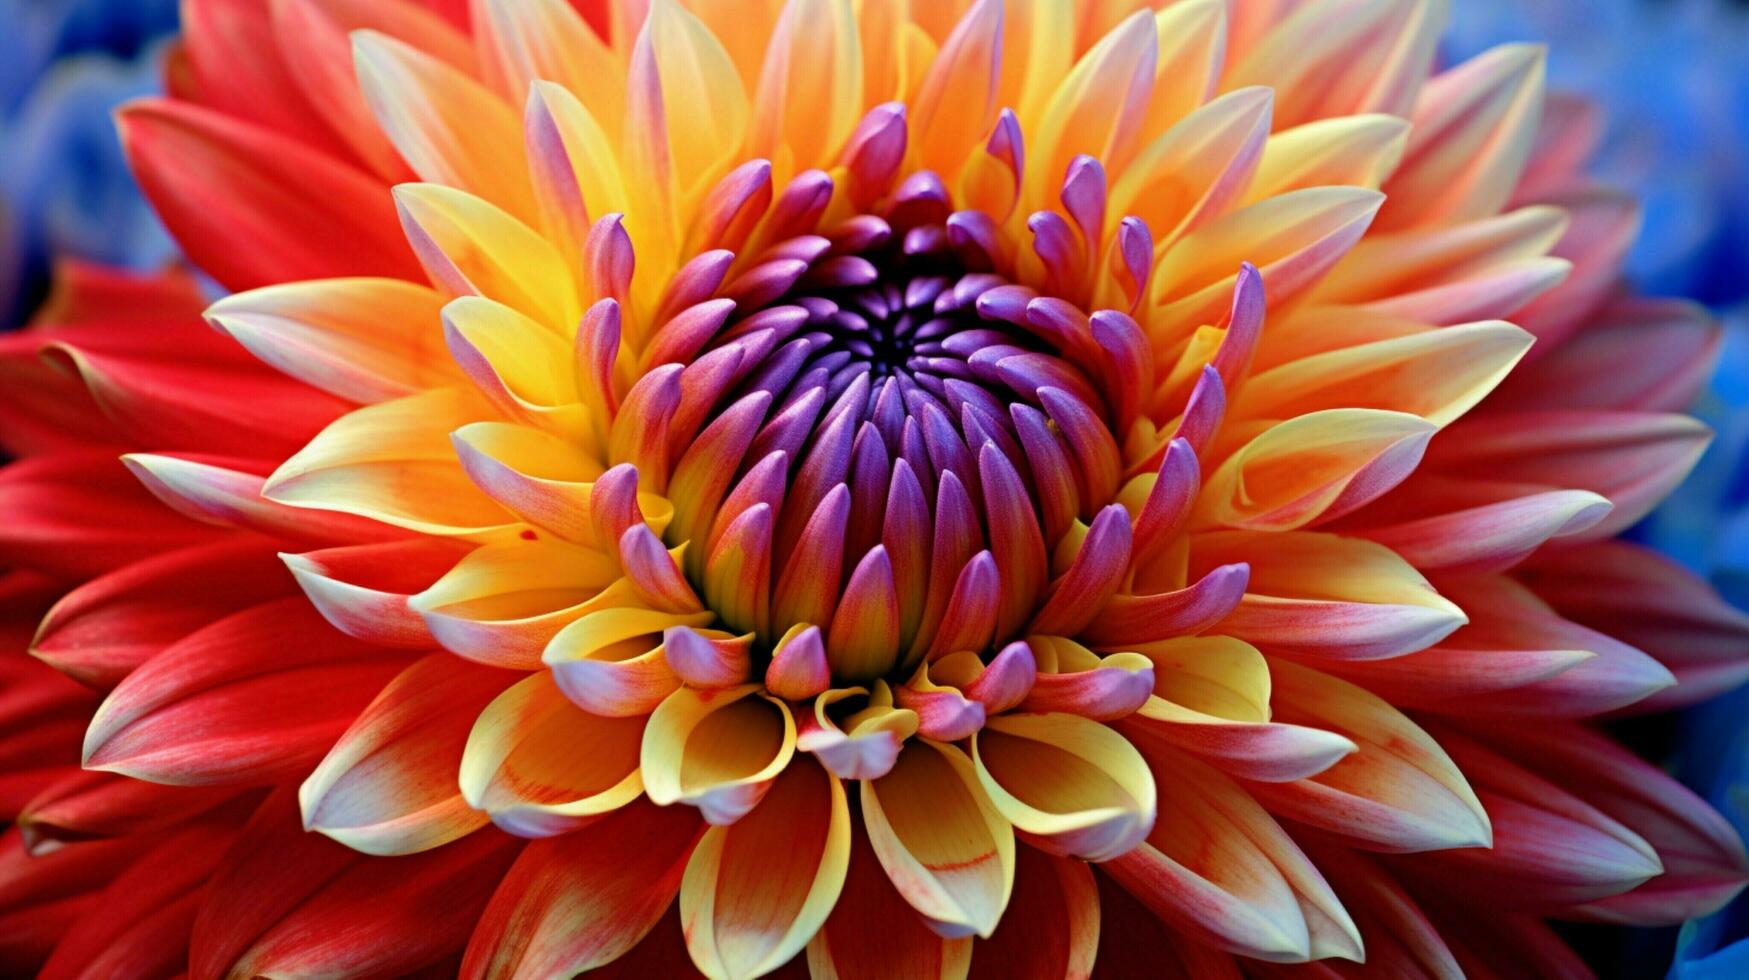 vibrant colored flower head close up showcasing petal photo